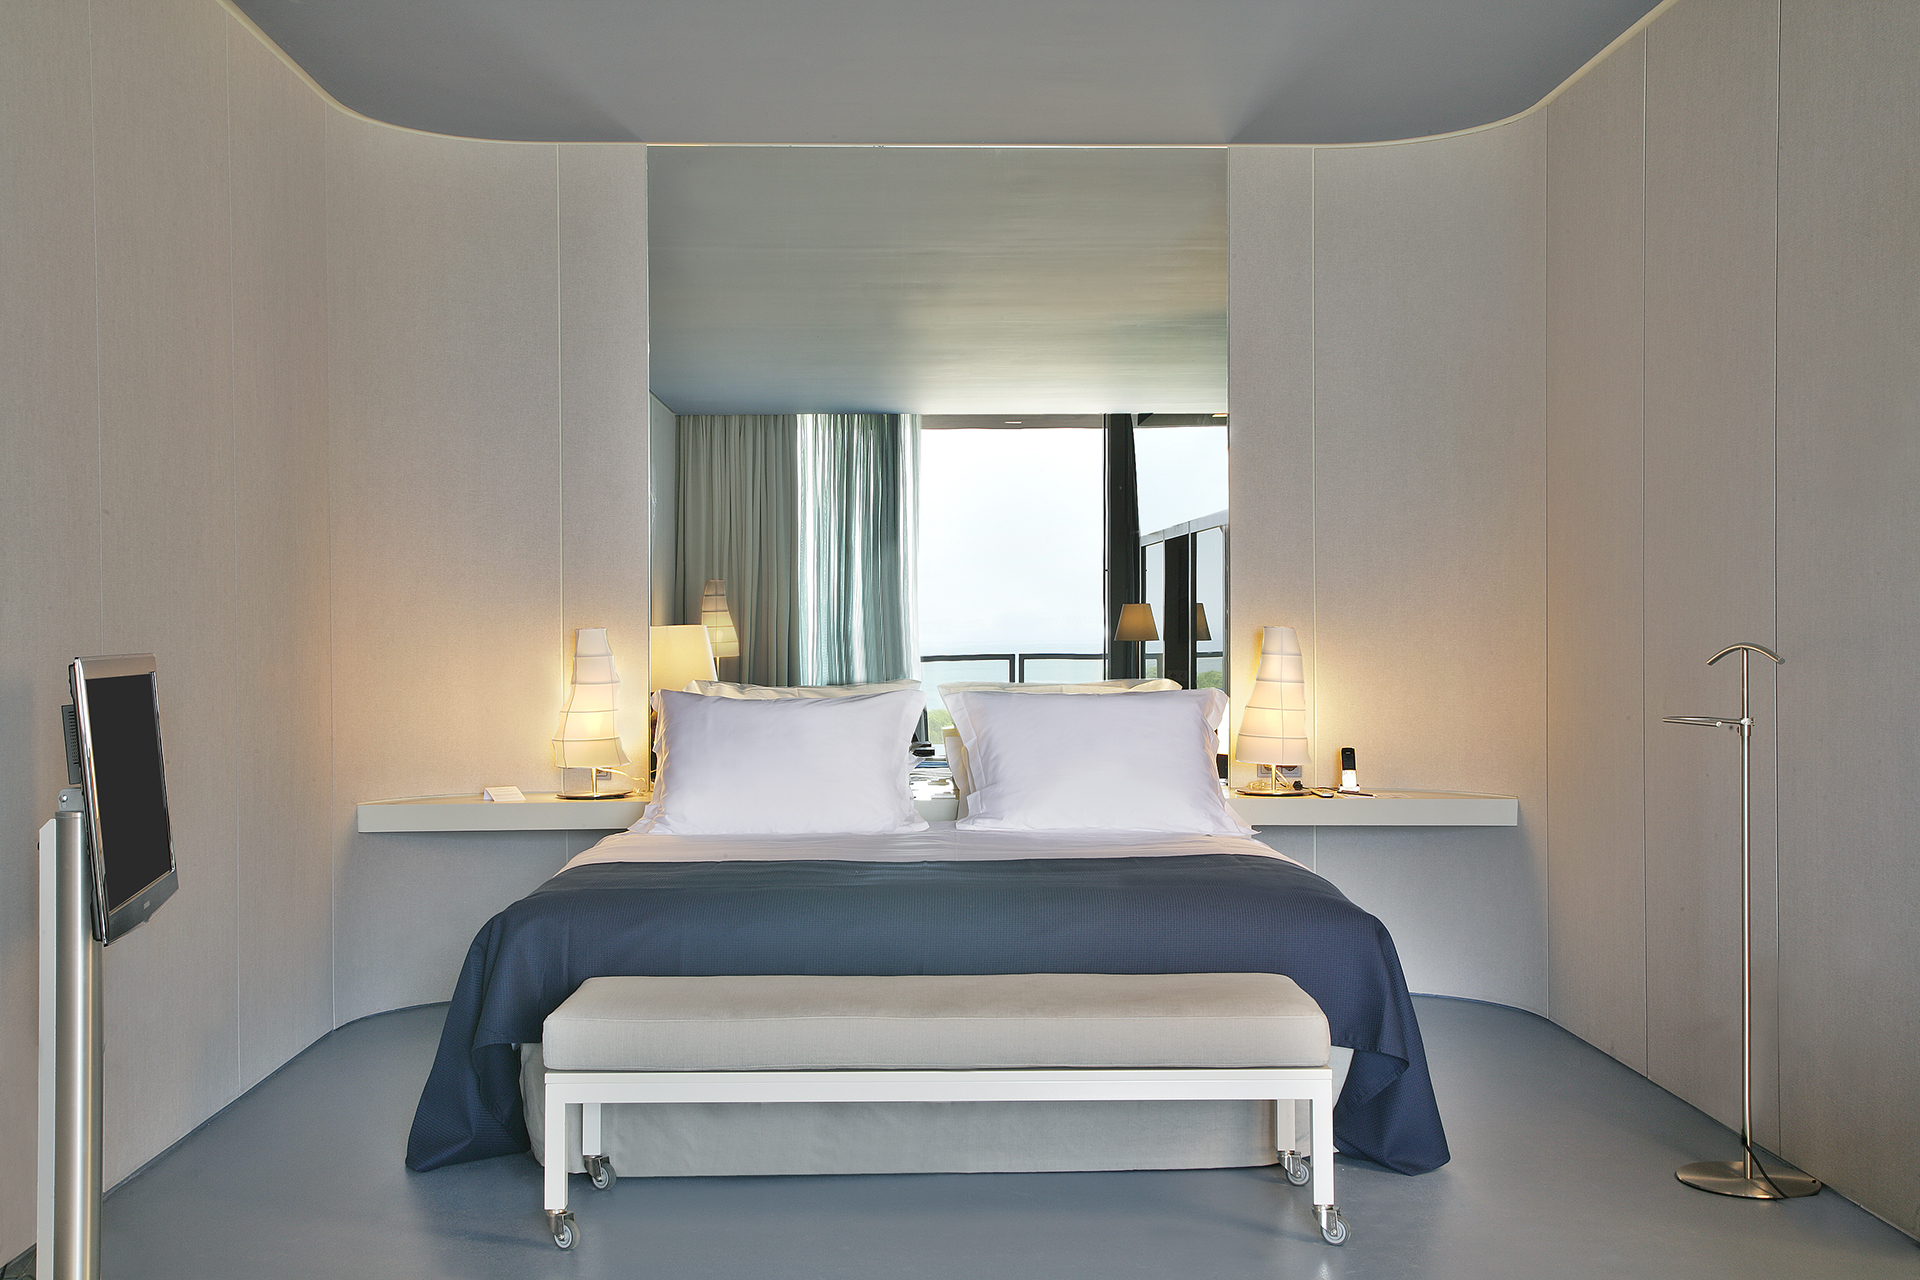 Golf-expedition-golfreizen-golfresort-Royal-The-Oitavos-Hotel-appartement-deluxe-bedroom